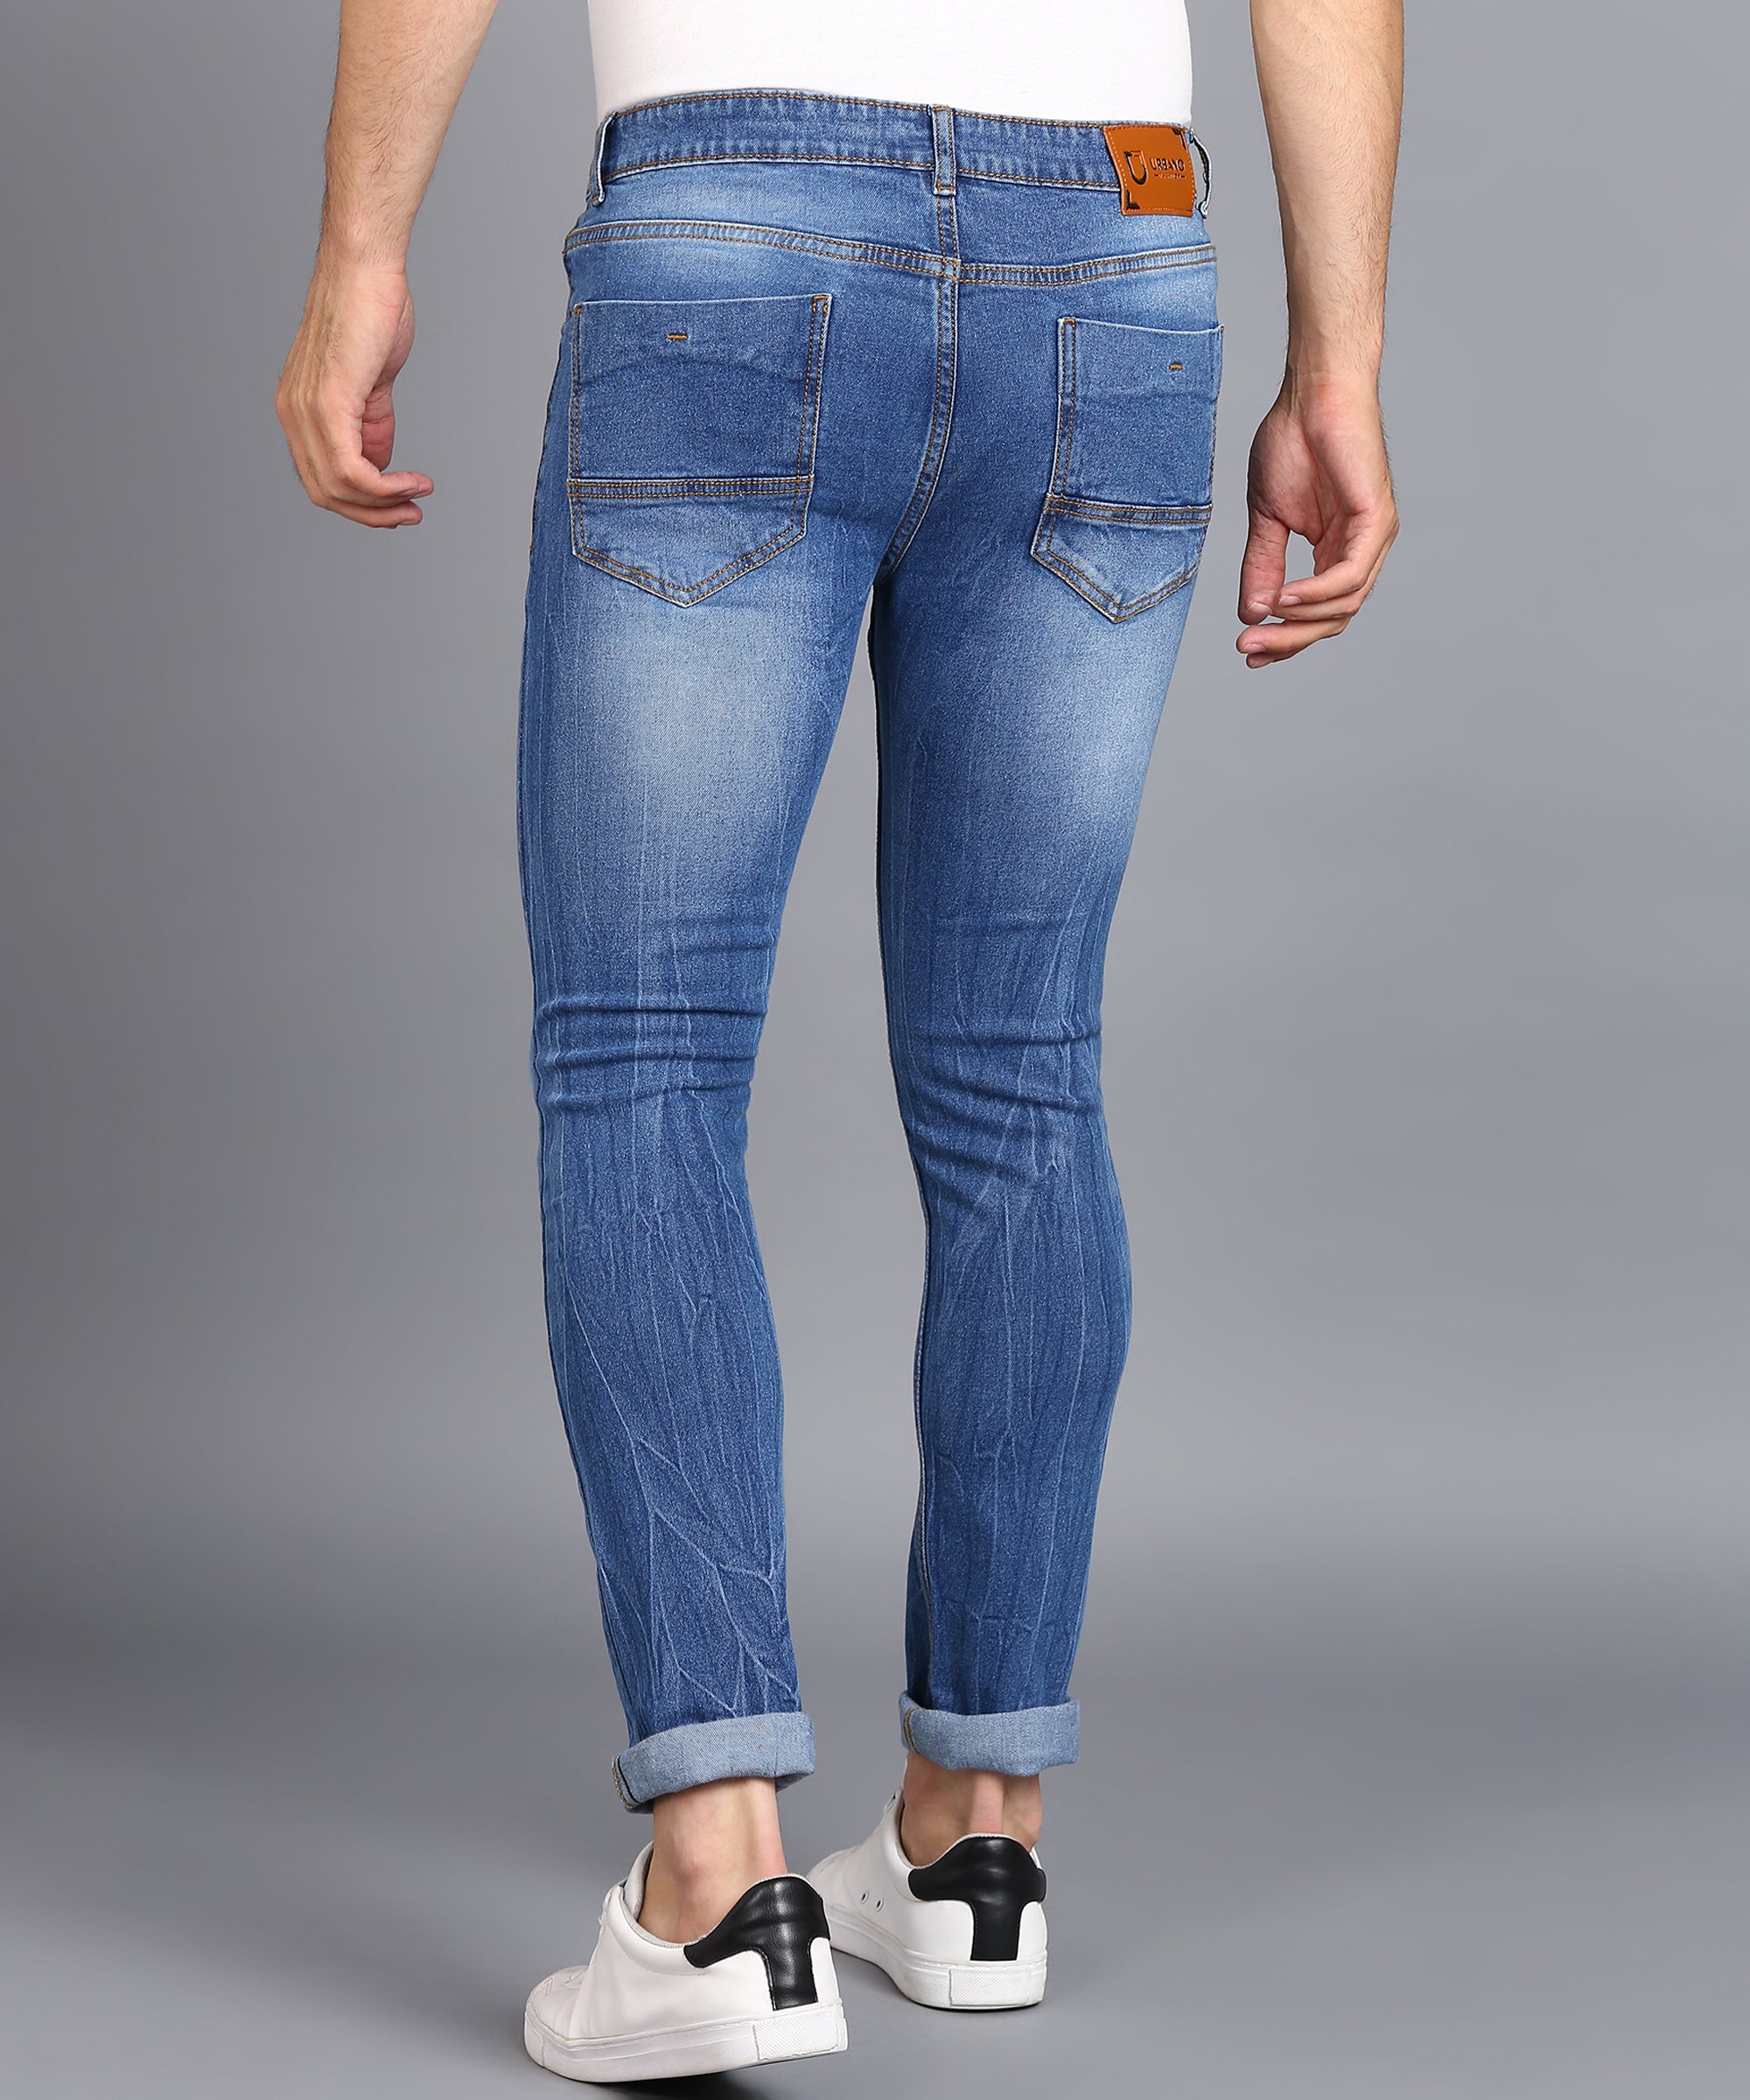 Urbano Fashion Men's Dark Blue Skinny Fit Washed Jeans Stretchable